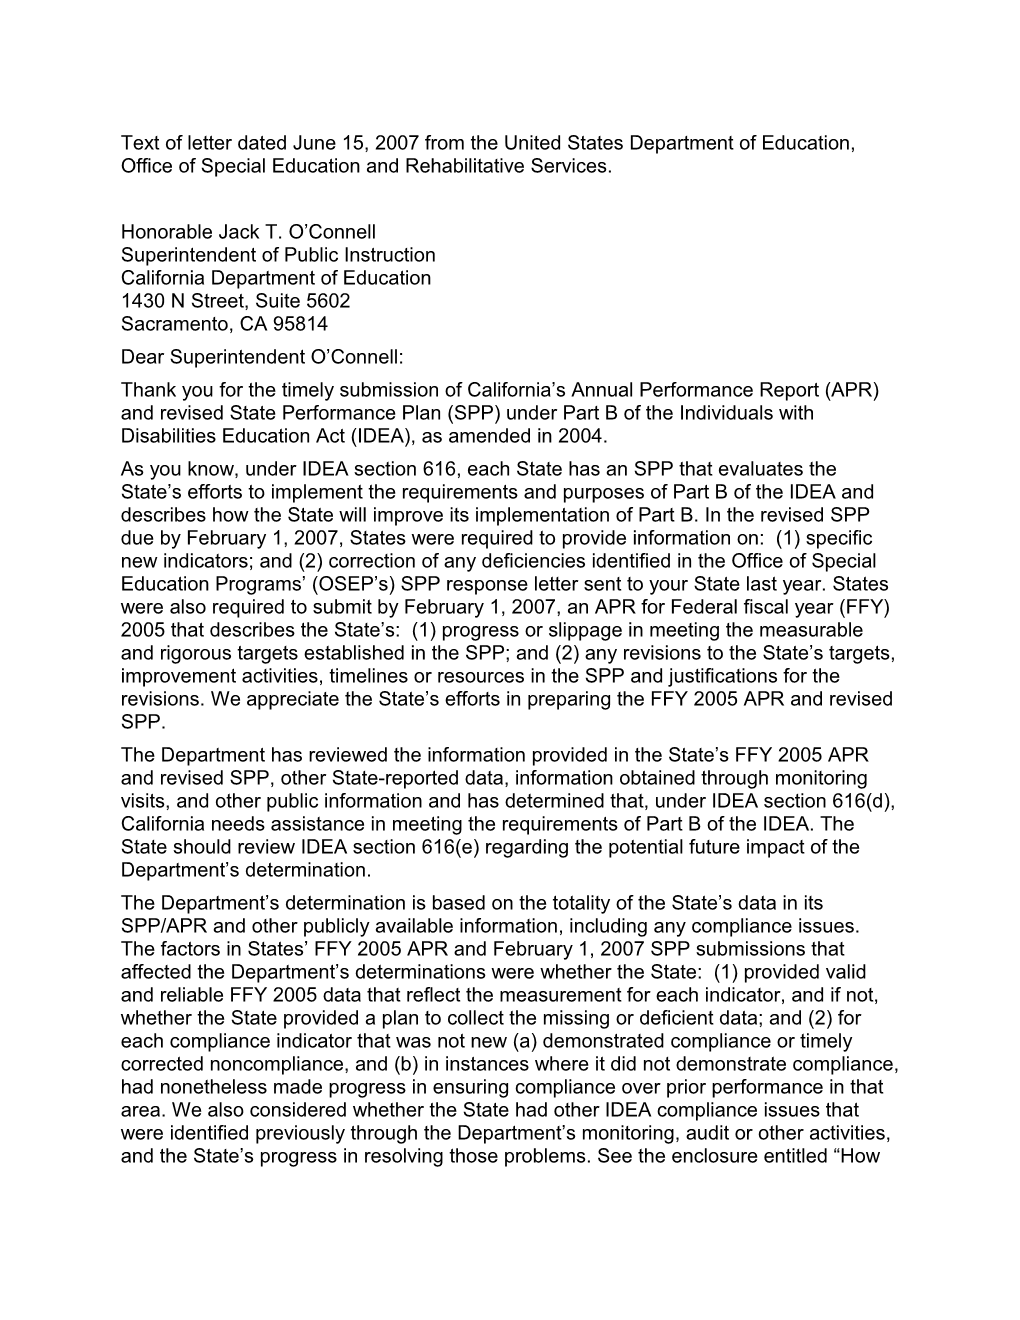 APR Response Letter - Quality Assurance Process (CA Dept of Education)